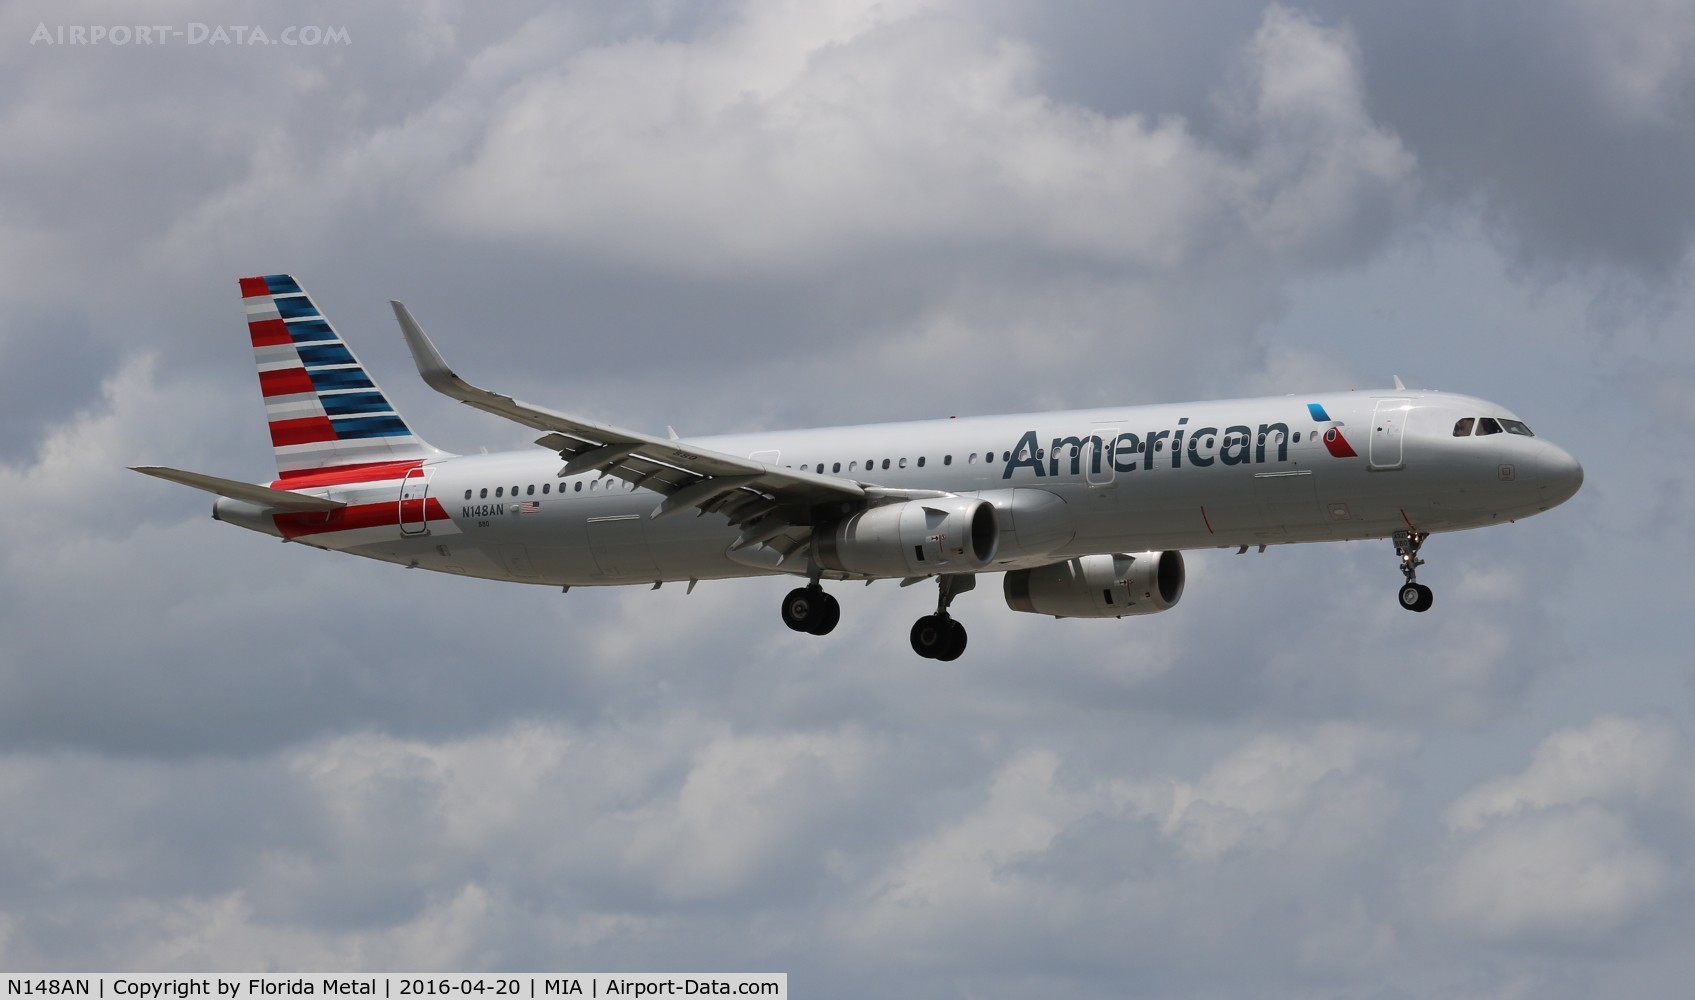 N148AN, 2015 Airbus A321-231 C/N 6790, American